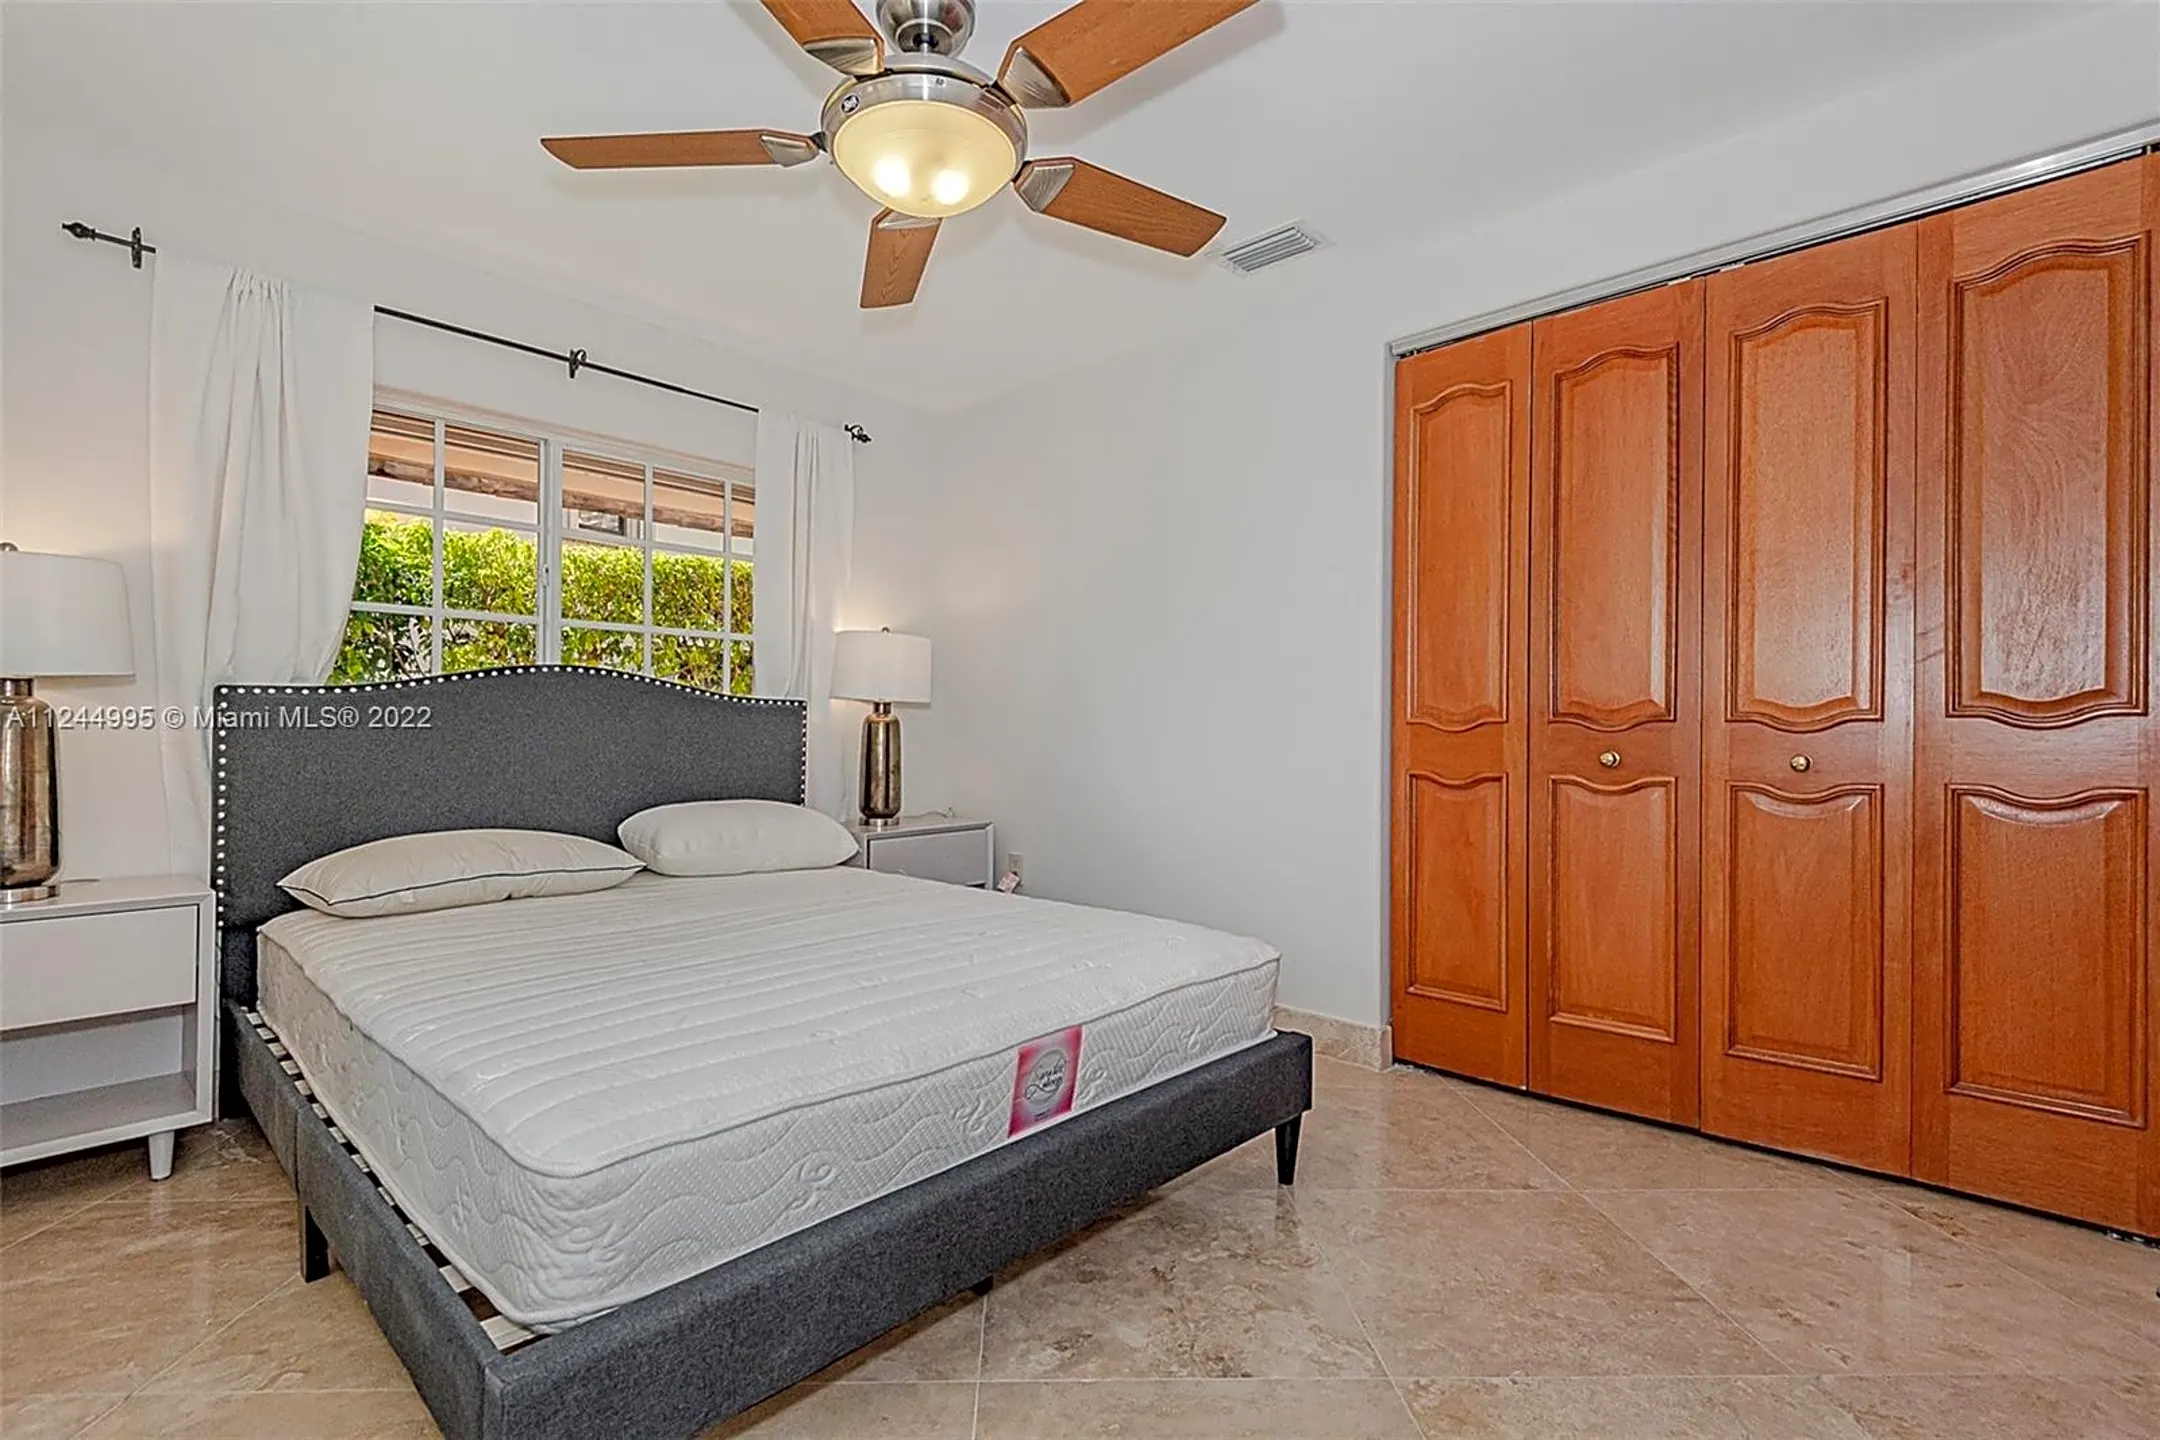 Bedroom - 18900 N Bay Rd - Sunny Isles Beach, FL